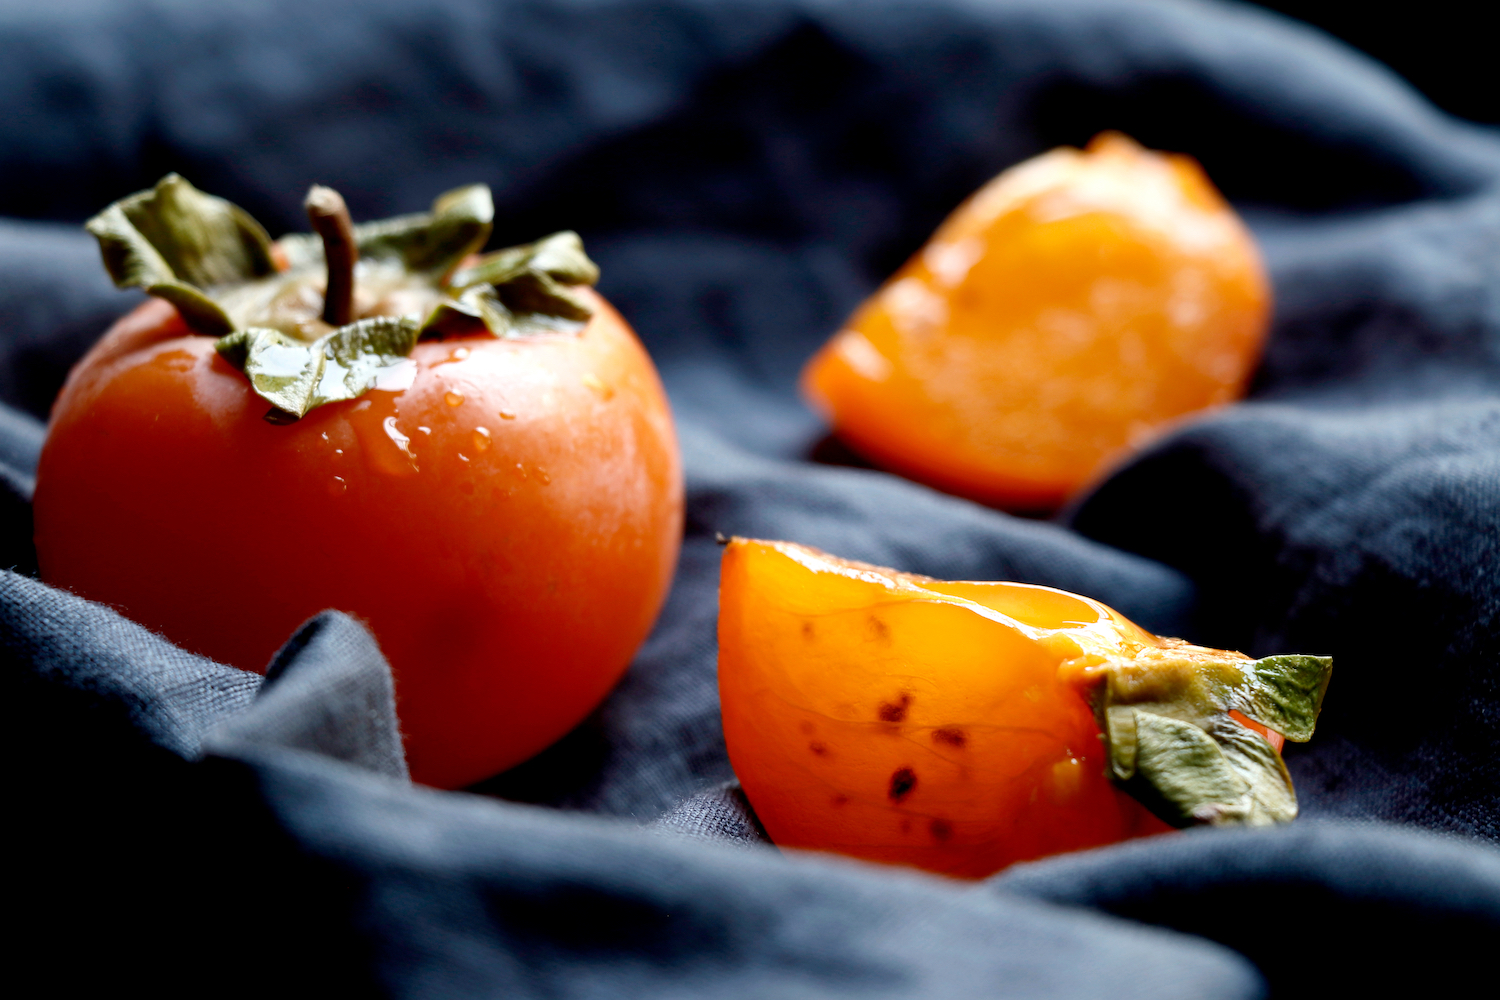 Slices of persimmon.Ripe orange persimmon fruit.Close up of fresh kaki on dark blue.Set of kaki.